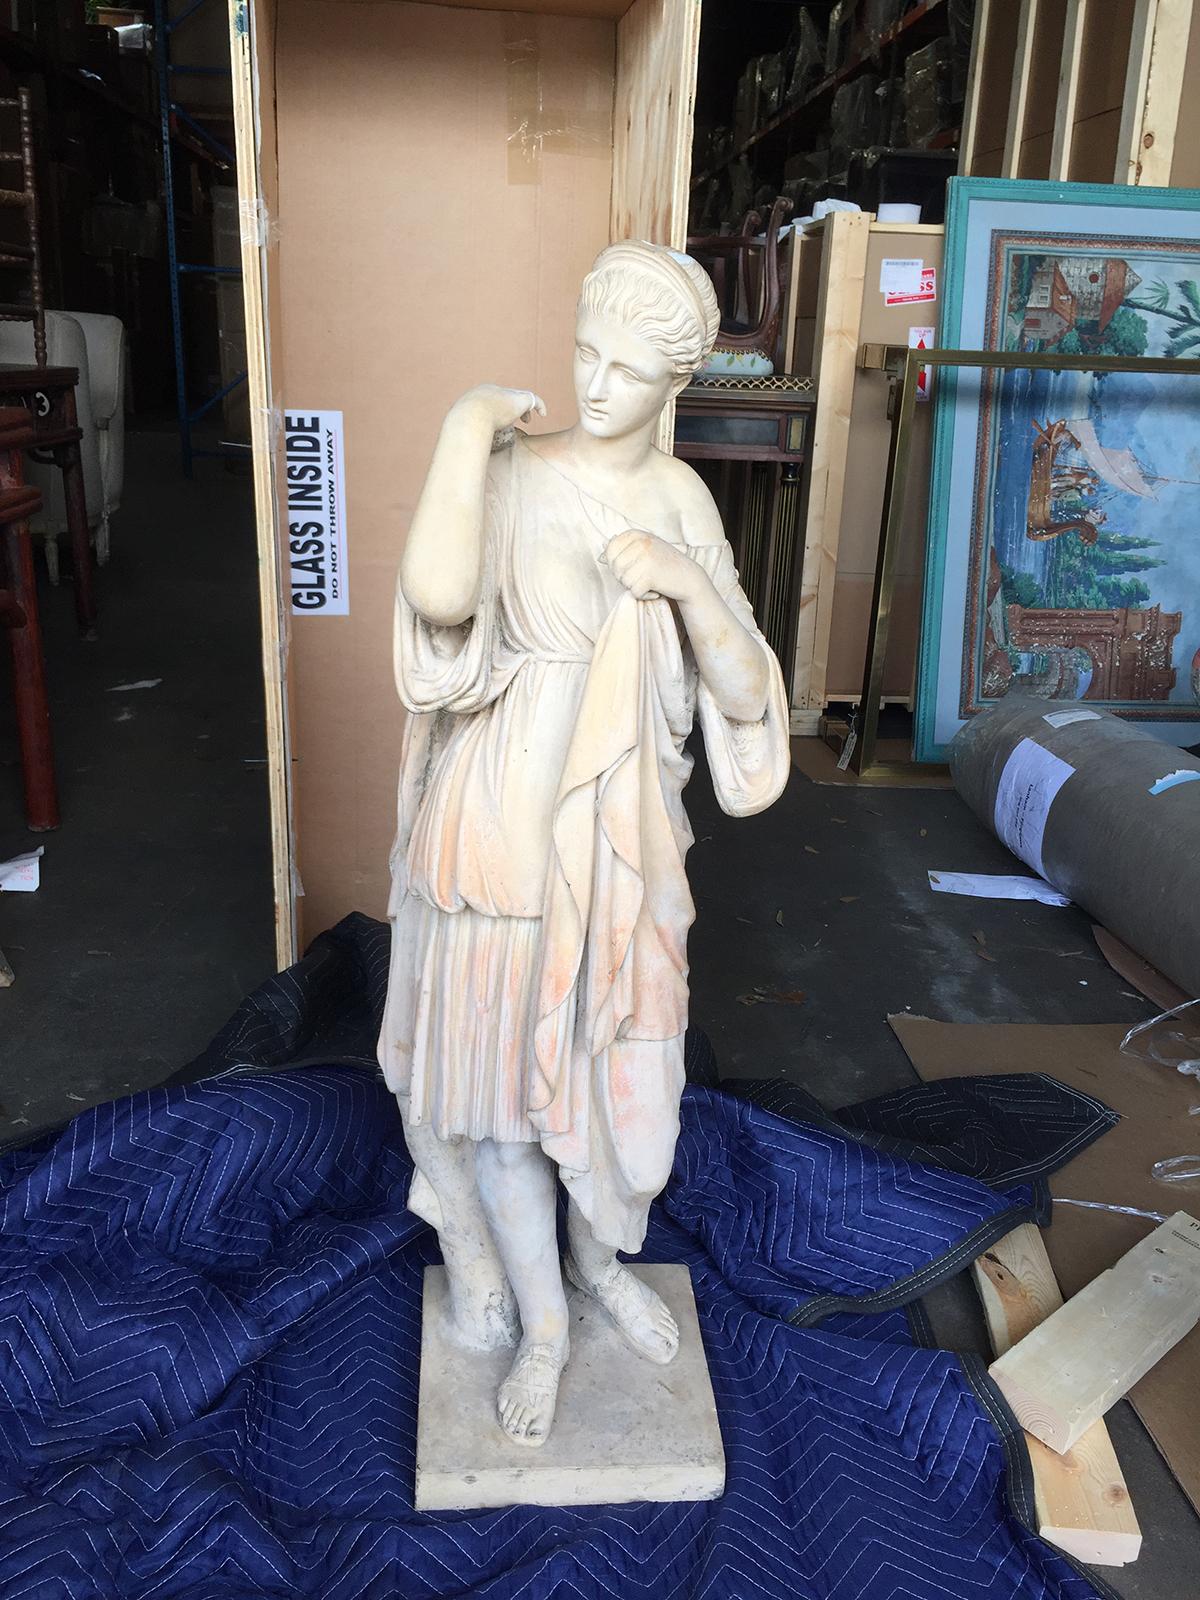 19th century English neoclassical Coade stone type sculpture/statue/figure of a classical draped maiden.